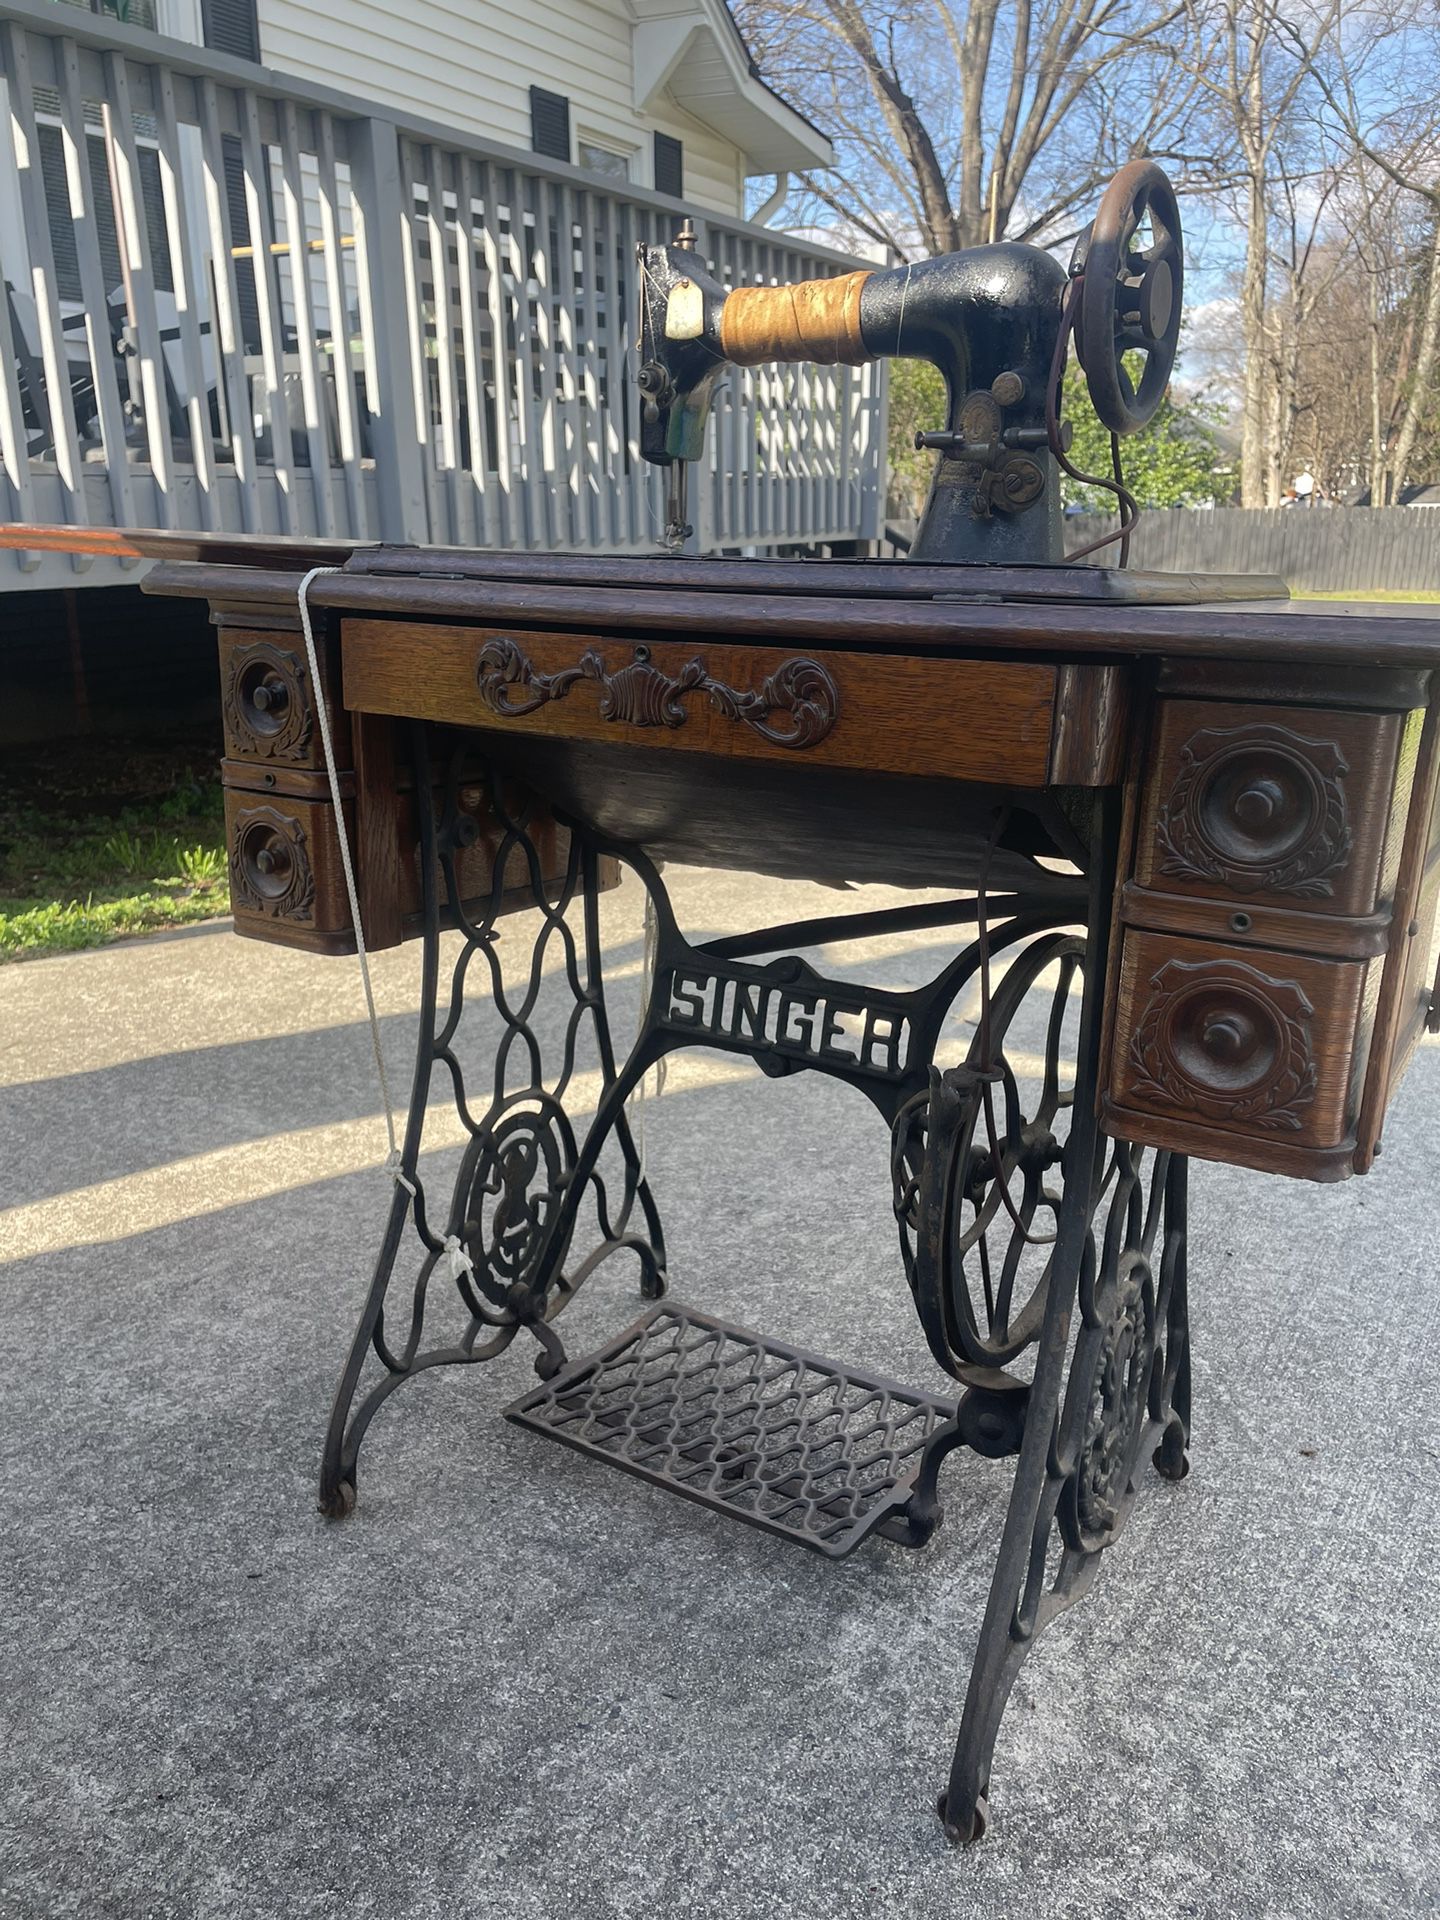 Antique Singer Sewing Machine $40